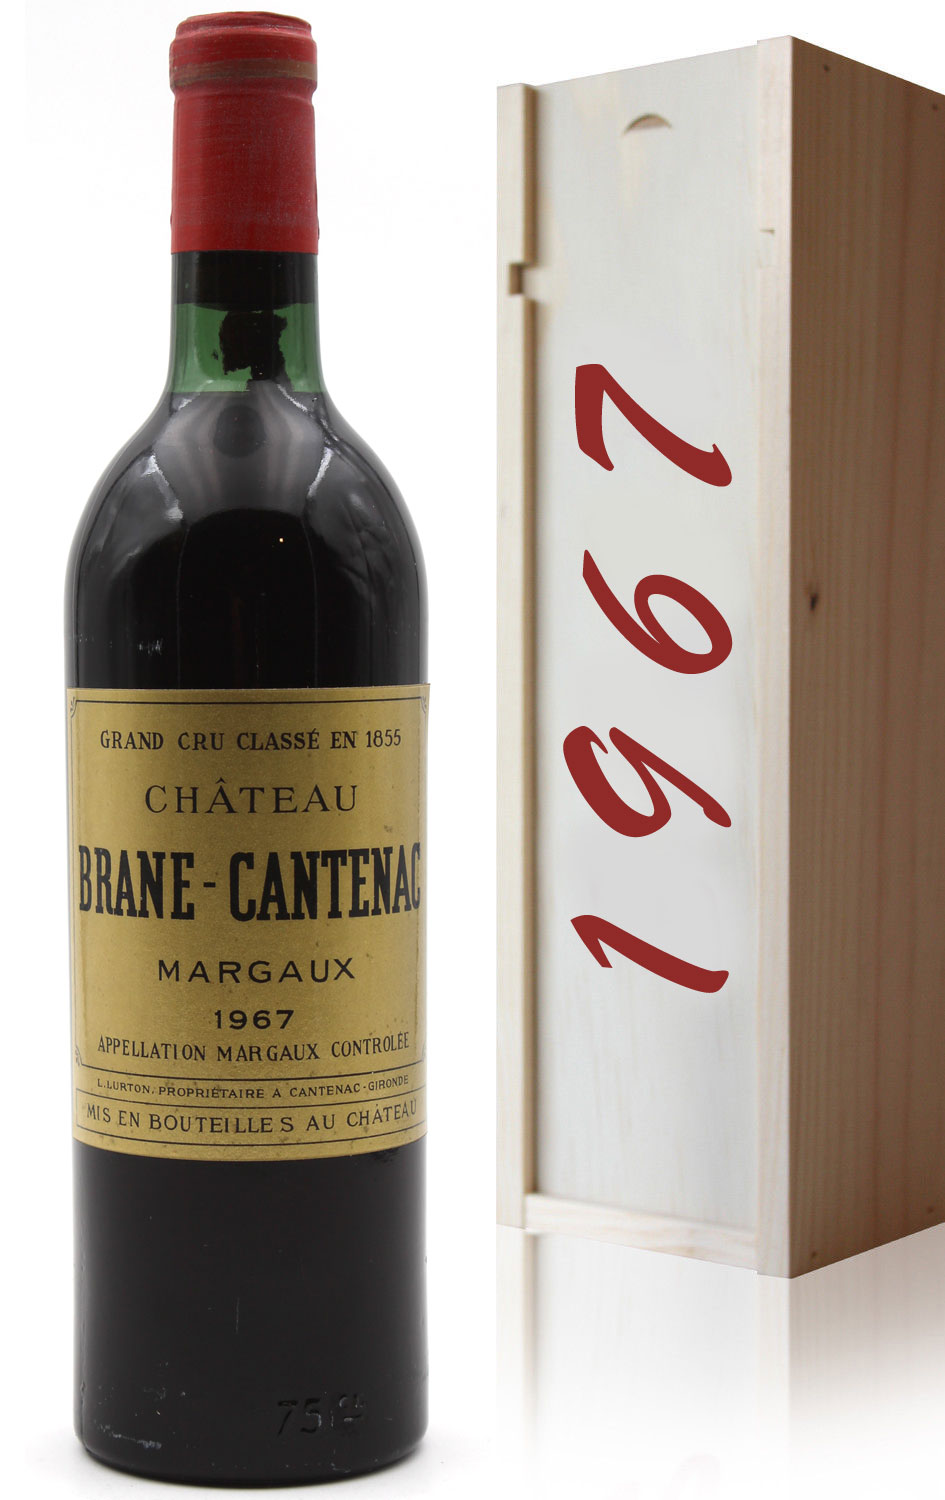 Brane-cantenac-1967-gift